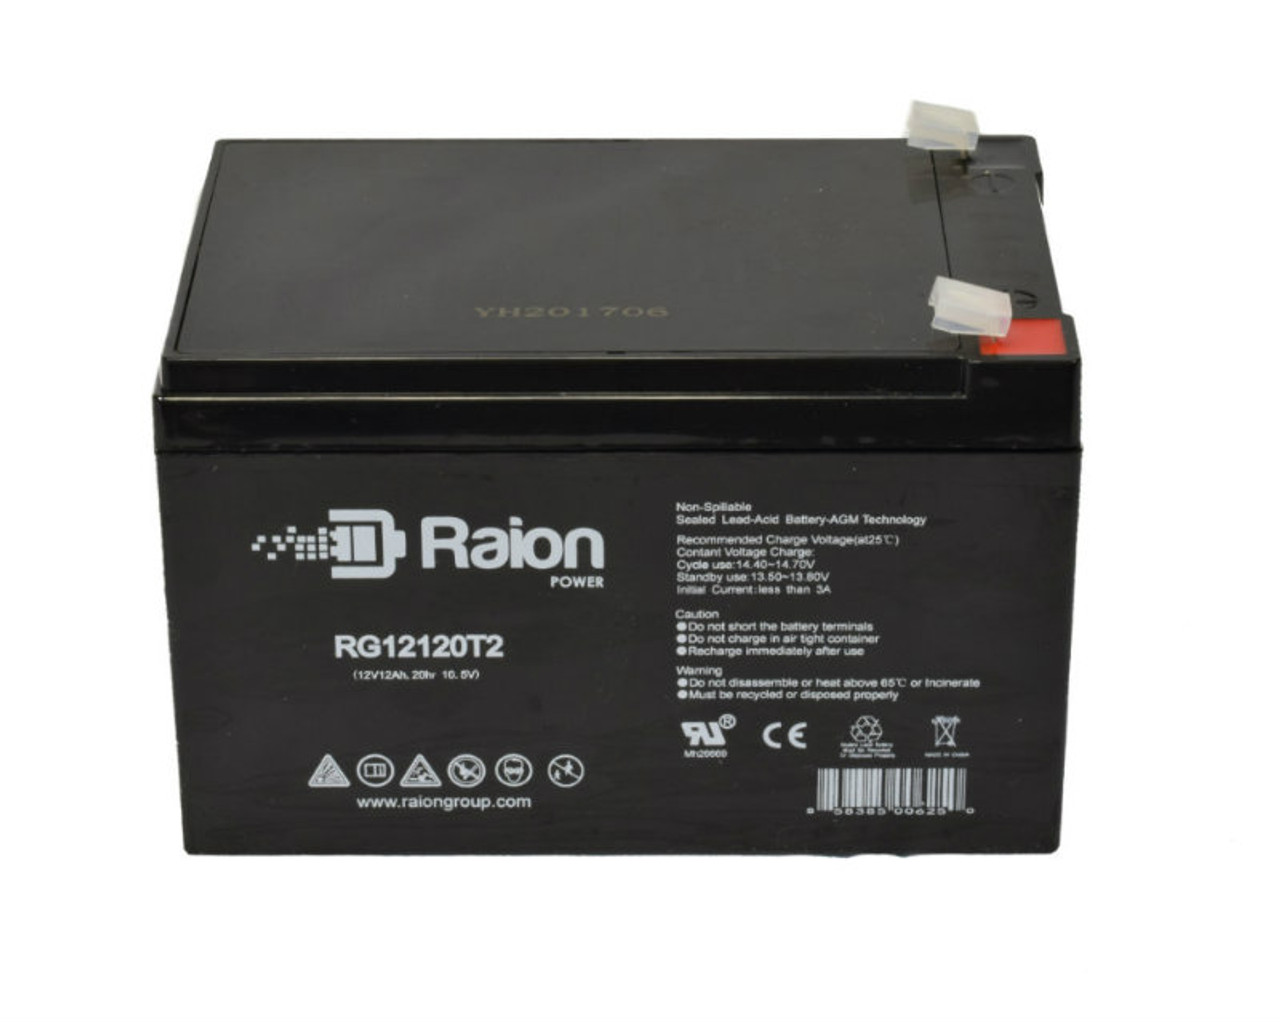 Raion Power RG12120T2 SLA Battery for Star II Scooter